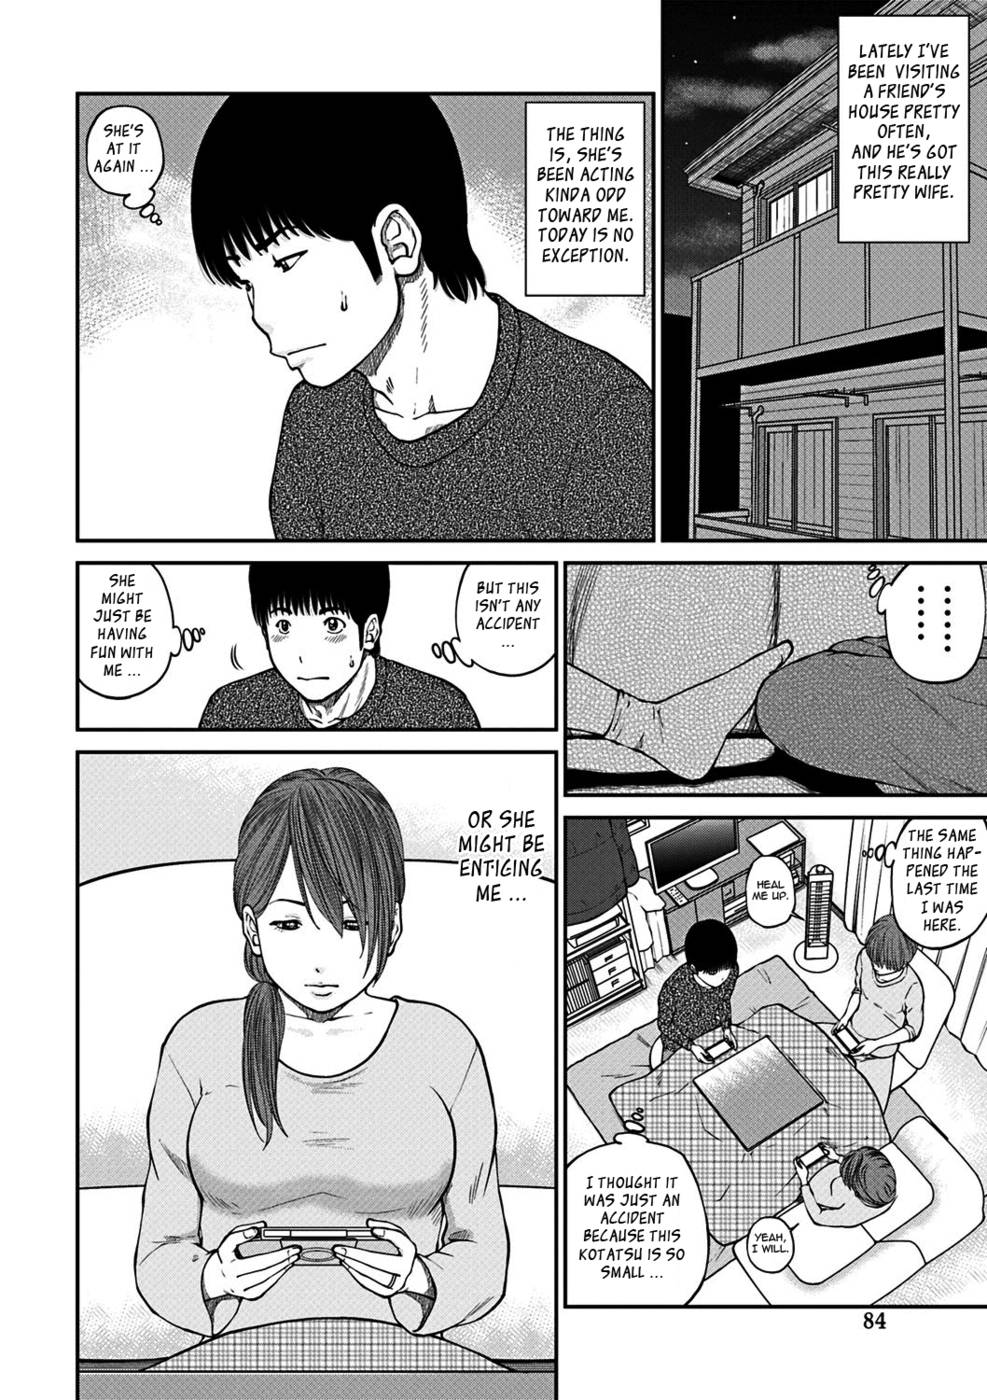 Sexxxxxxxxxxmom - 33 Year Old Unsatisfied Wife-Chapter 5-Under The Kotatsu-Hentai Manga  Hentai Comic - Page: 2 - Online porn video at mobile